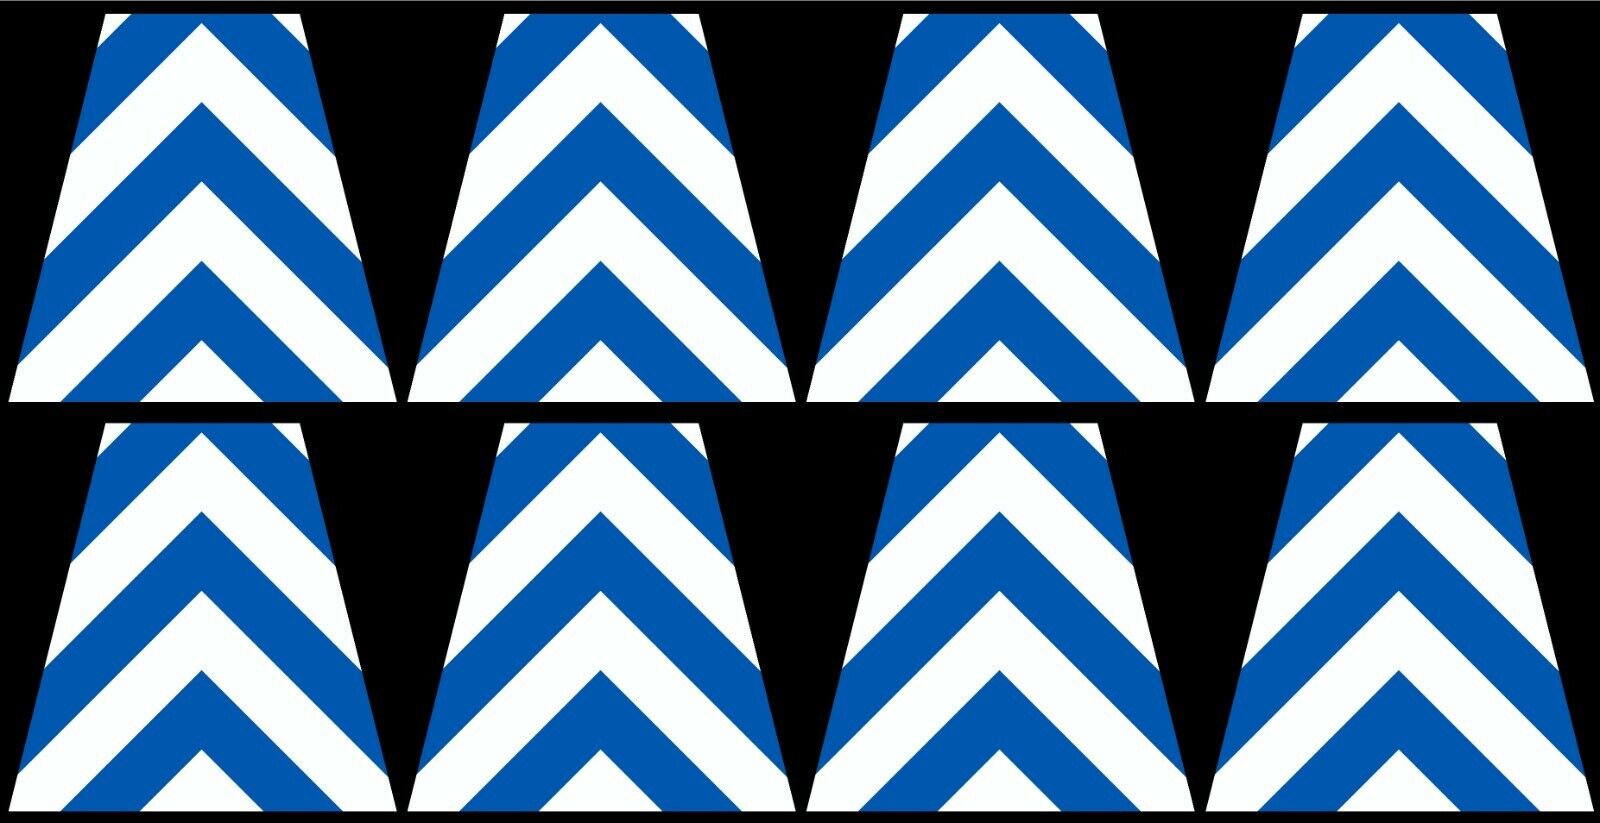 8 Fully Reflective Blue and White Chevron Fire Helmet Tetrahedrons Tet Trapezoid